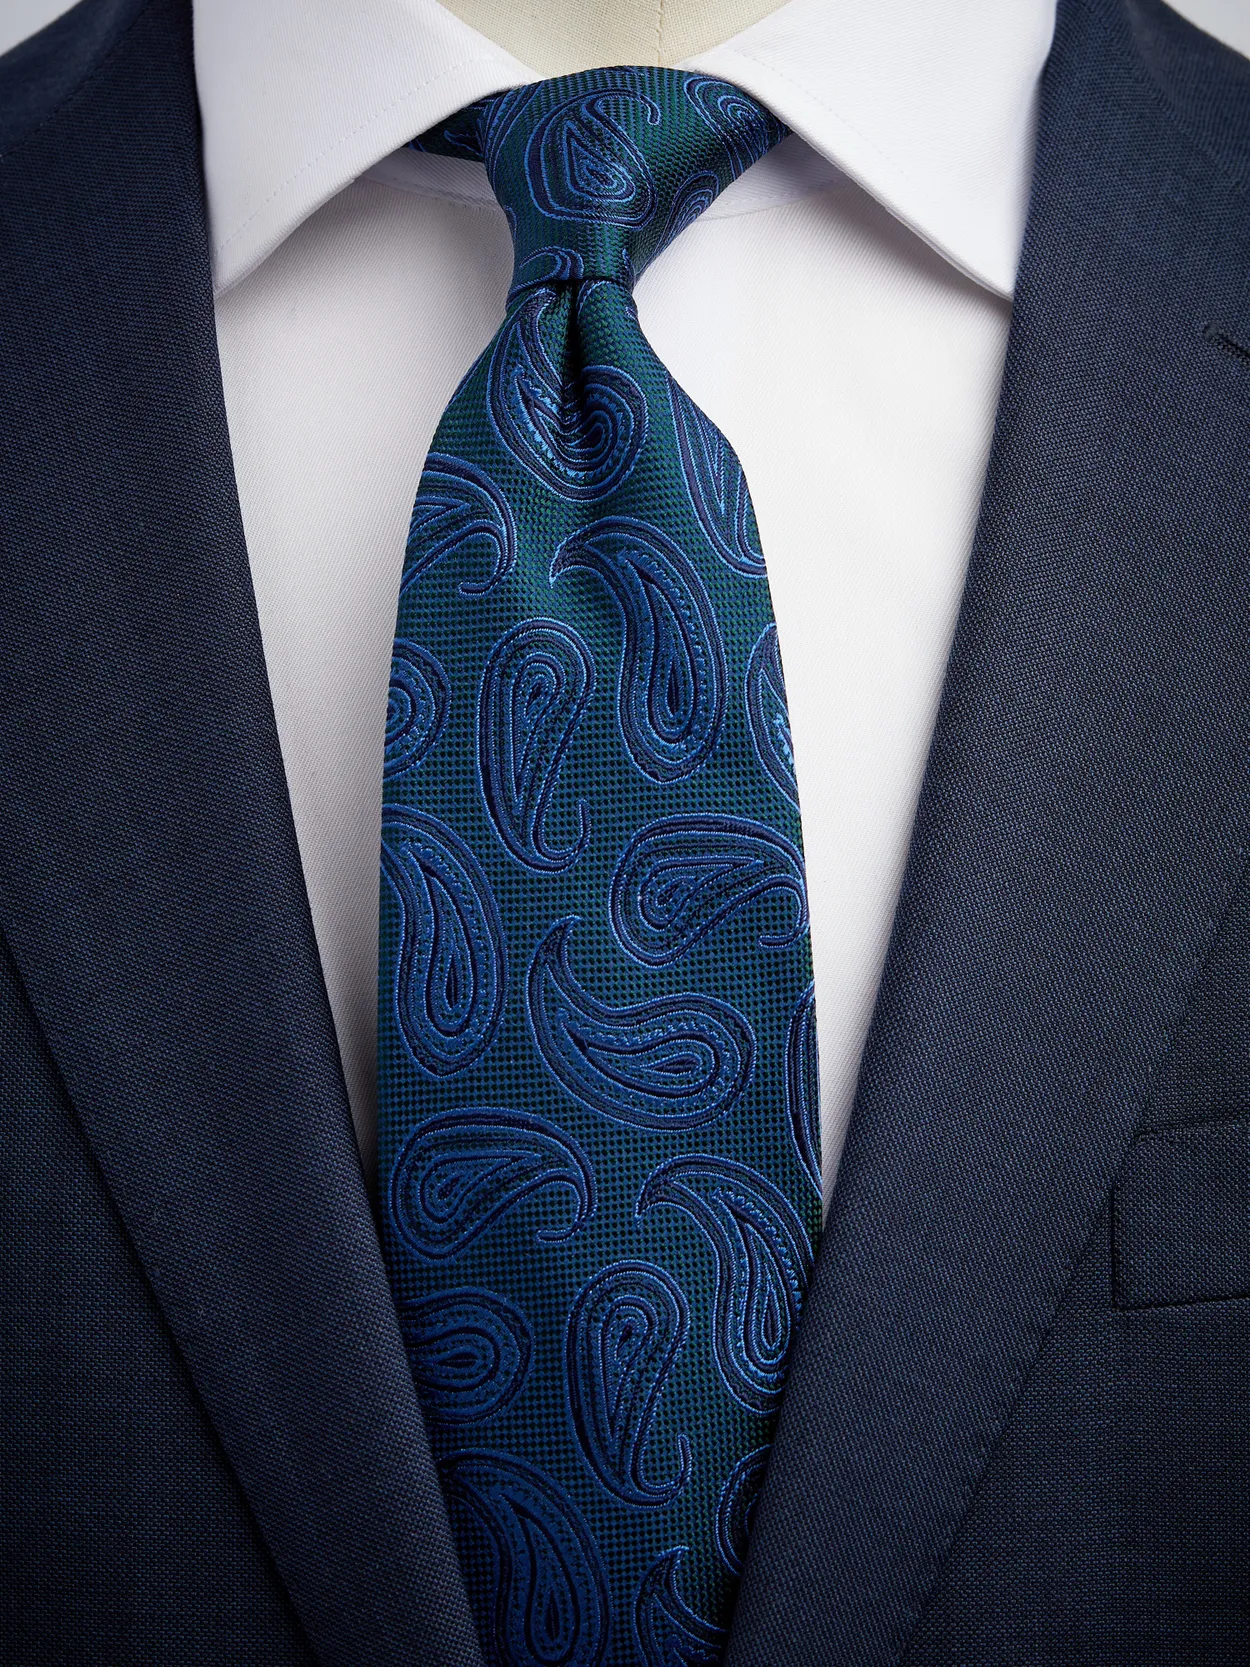 Green & Blue Tie Paisley